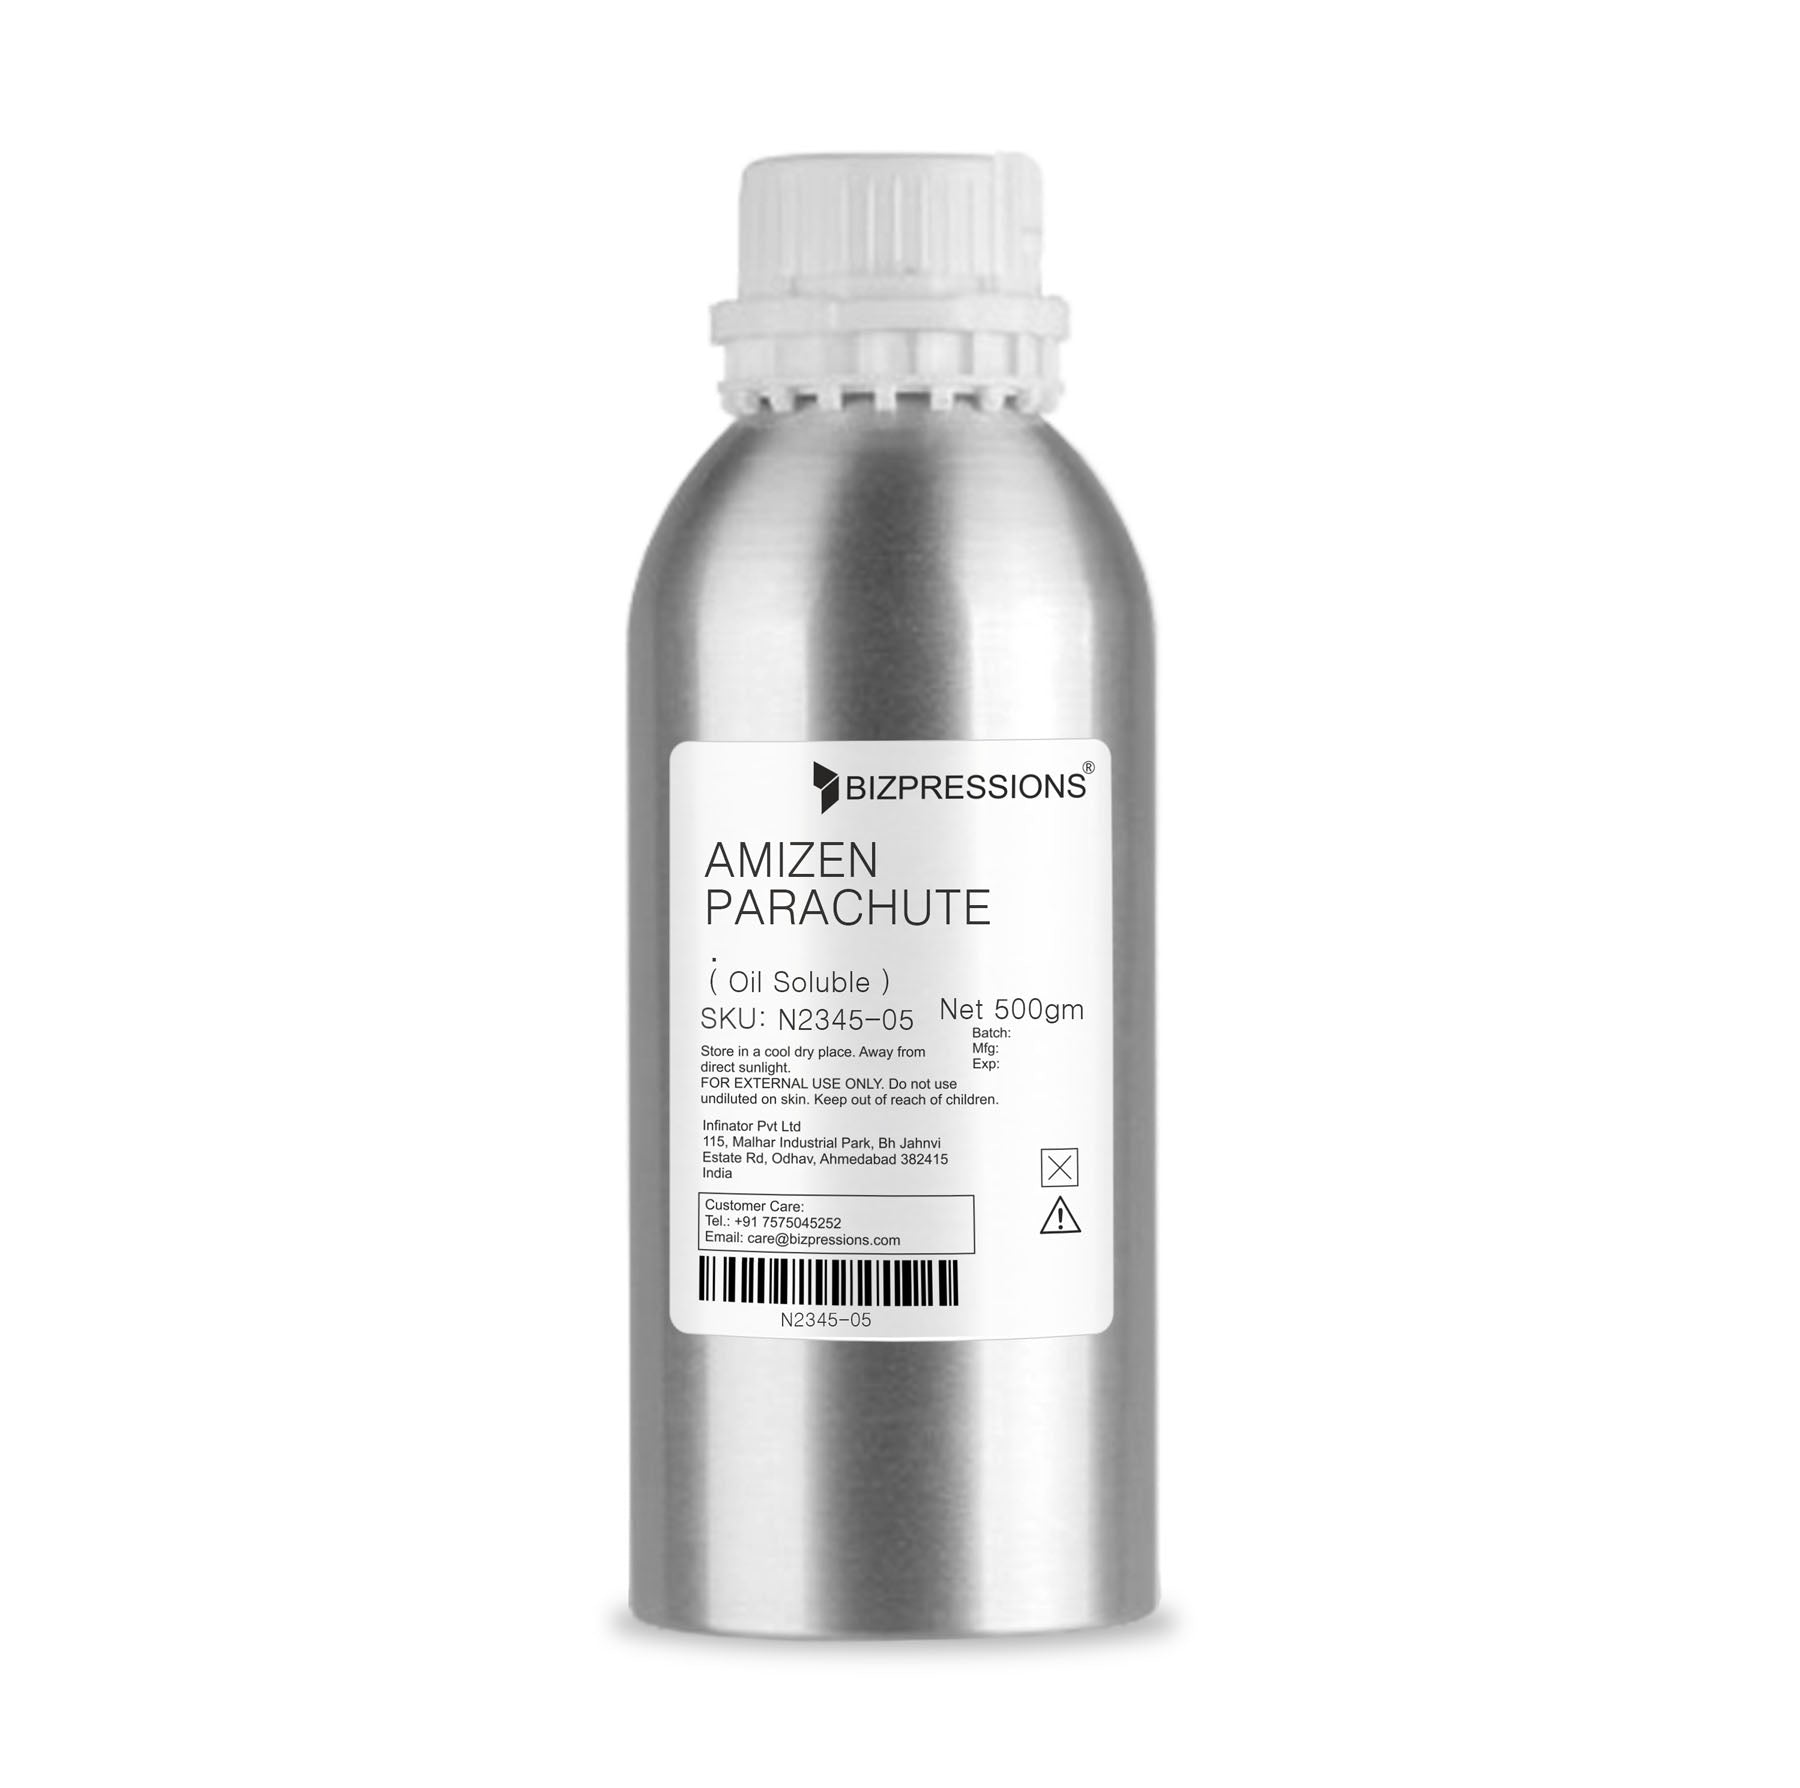 AMIZEN PARACHUTE - Fragrance ( Oil Soluble ) - 500 gm